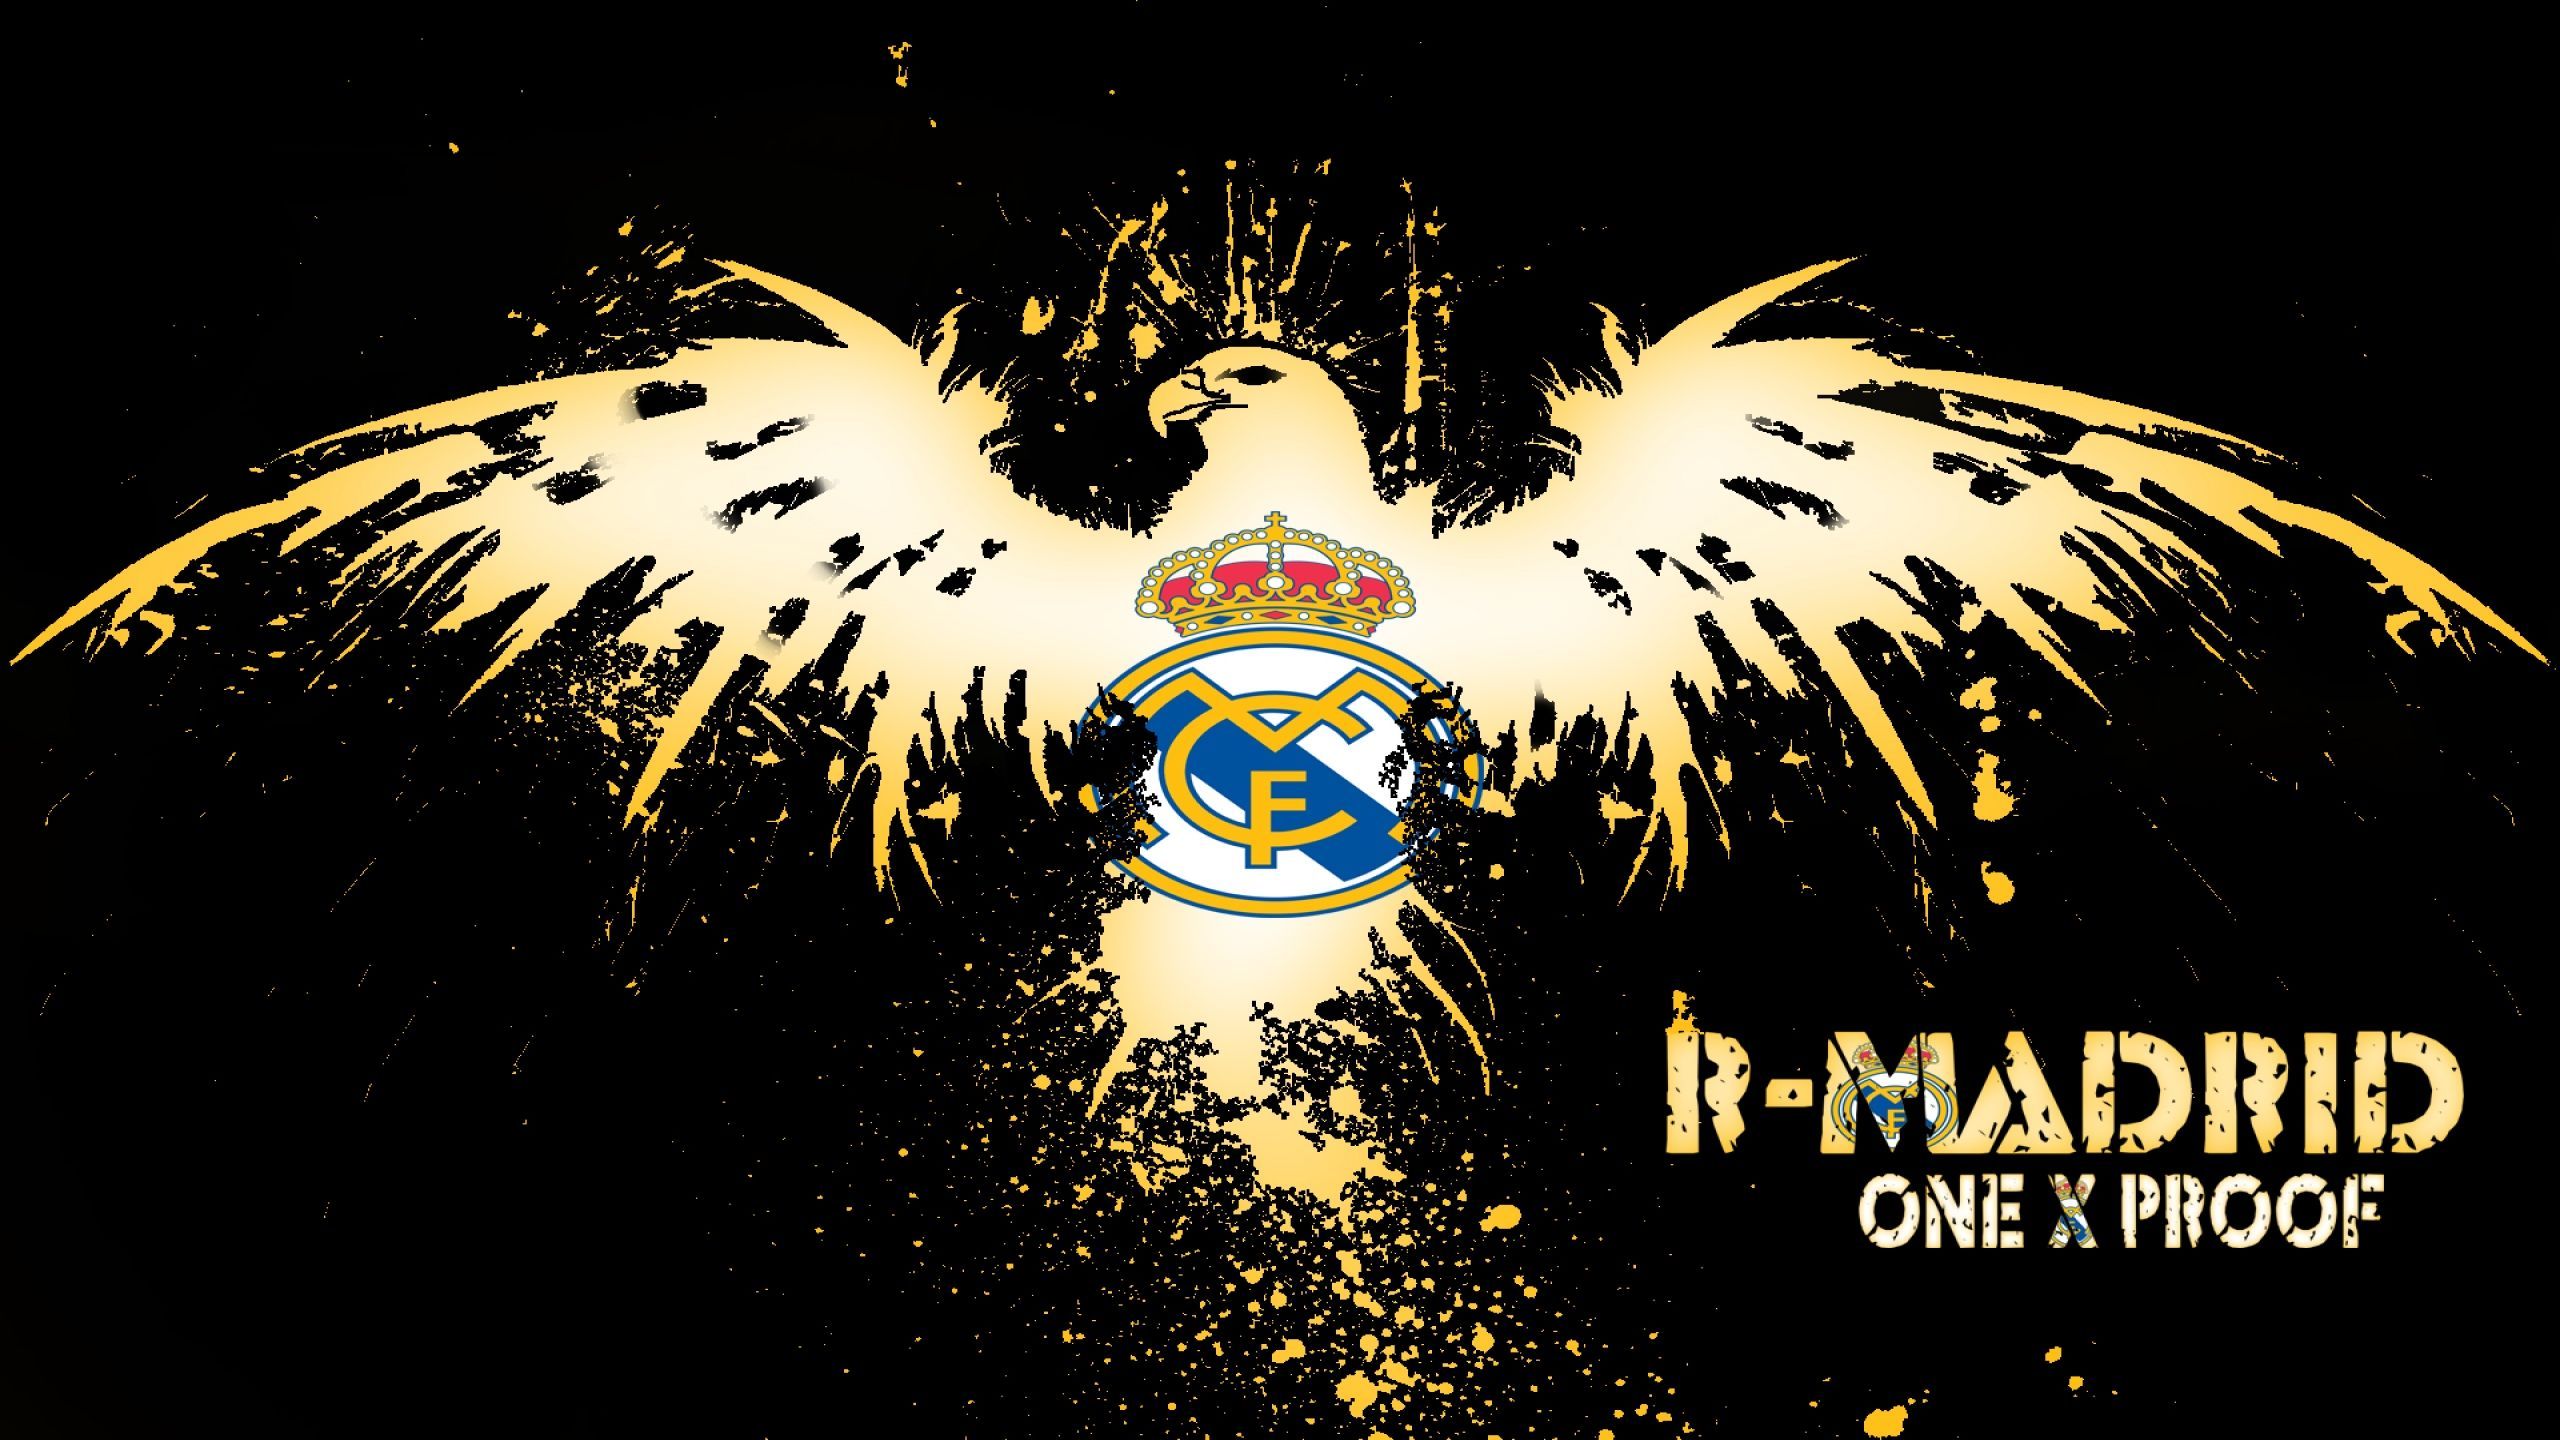 Real Madrid Soccerway Wallpaper HD. Real madrid logo wallpaper, Real madrid wallpaper, Madrid wallpaper